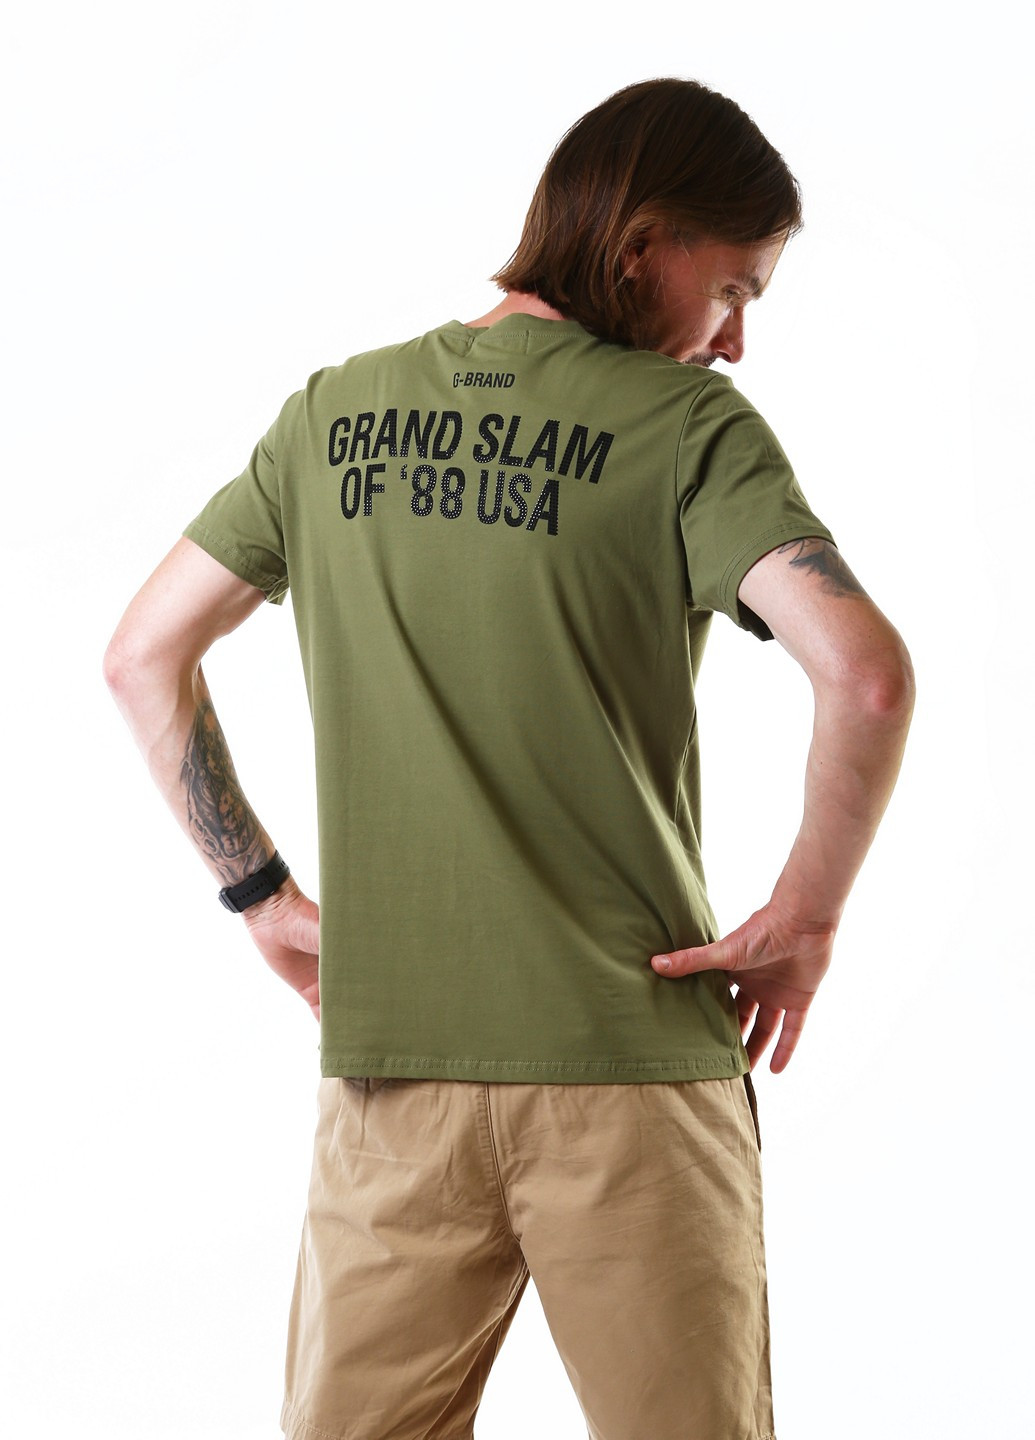 Хаки (оливковая) футболка G-brand